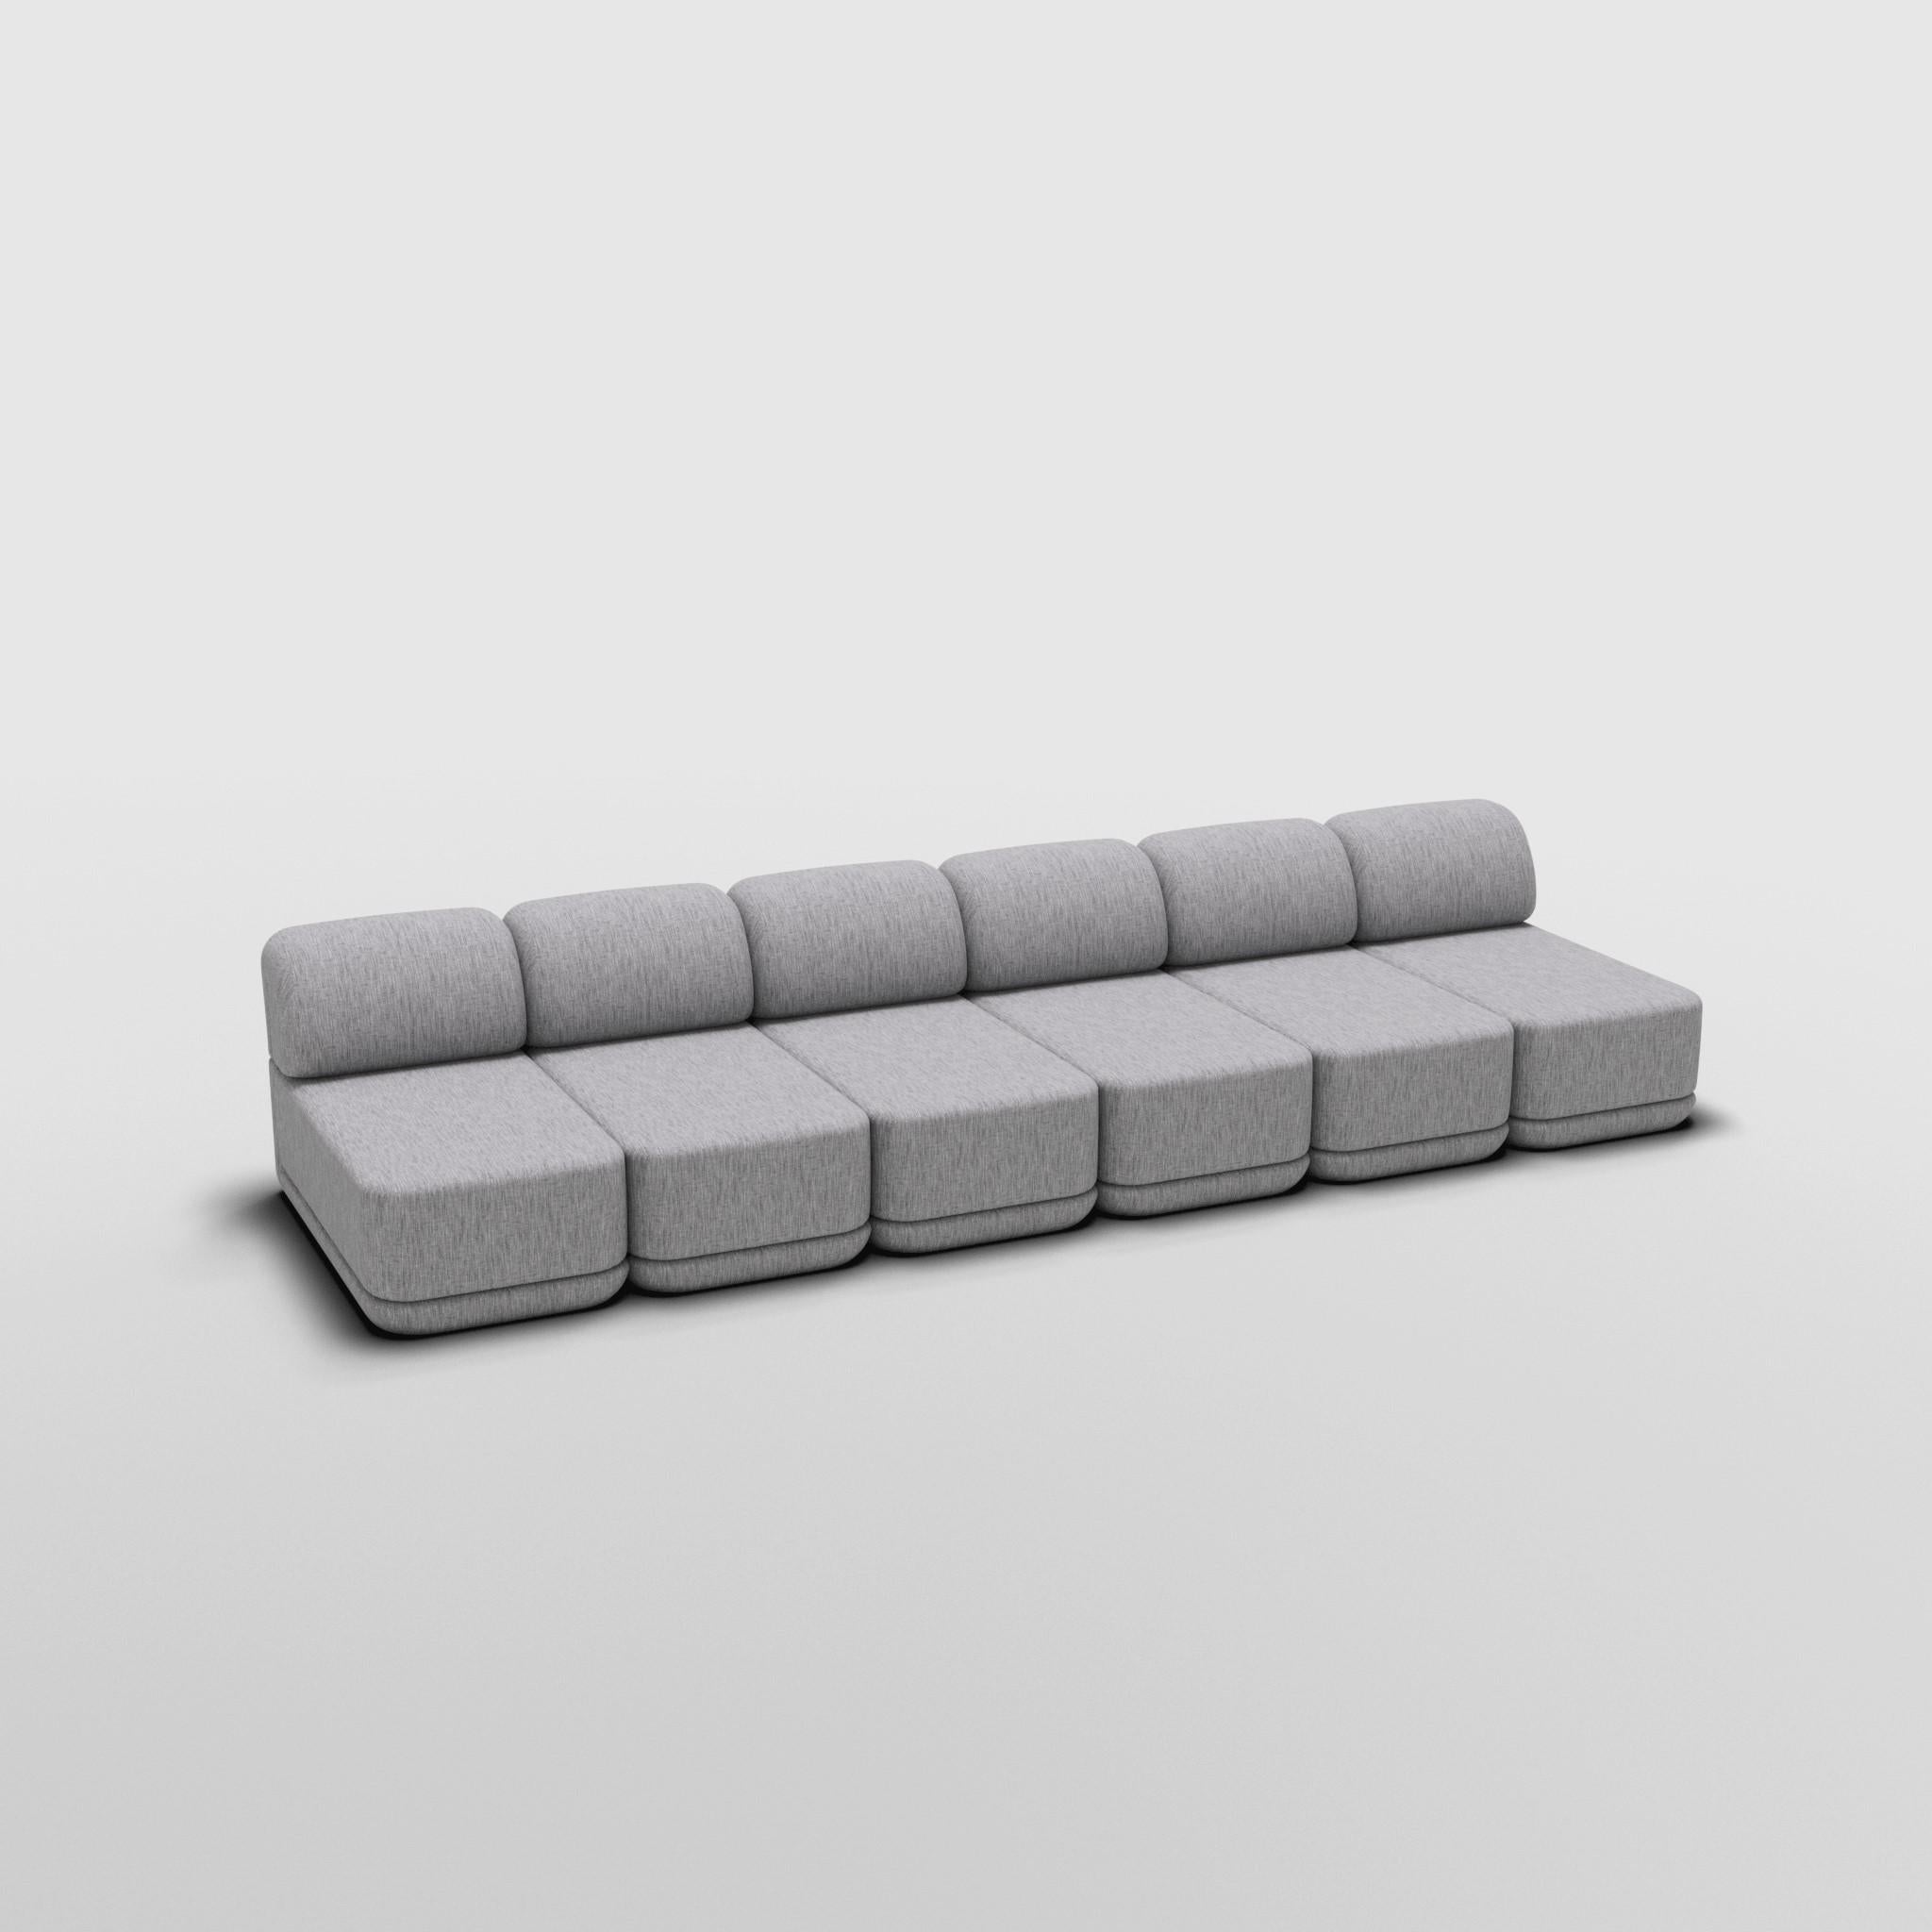 The Cube Sofa - Slim Caterpillar In New Condition For Sale In Ontario, CA